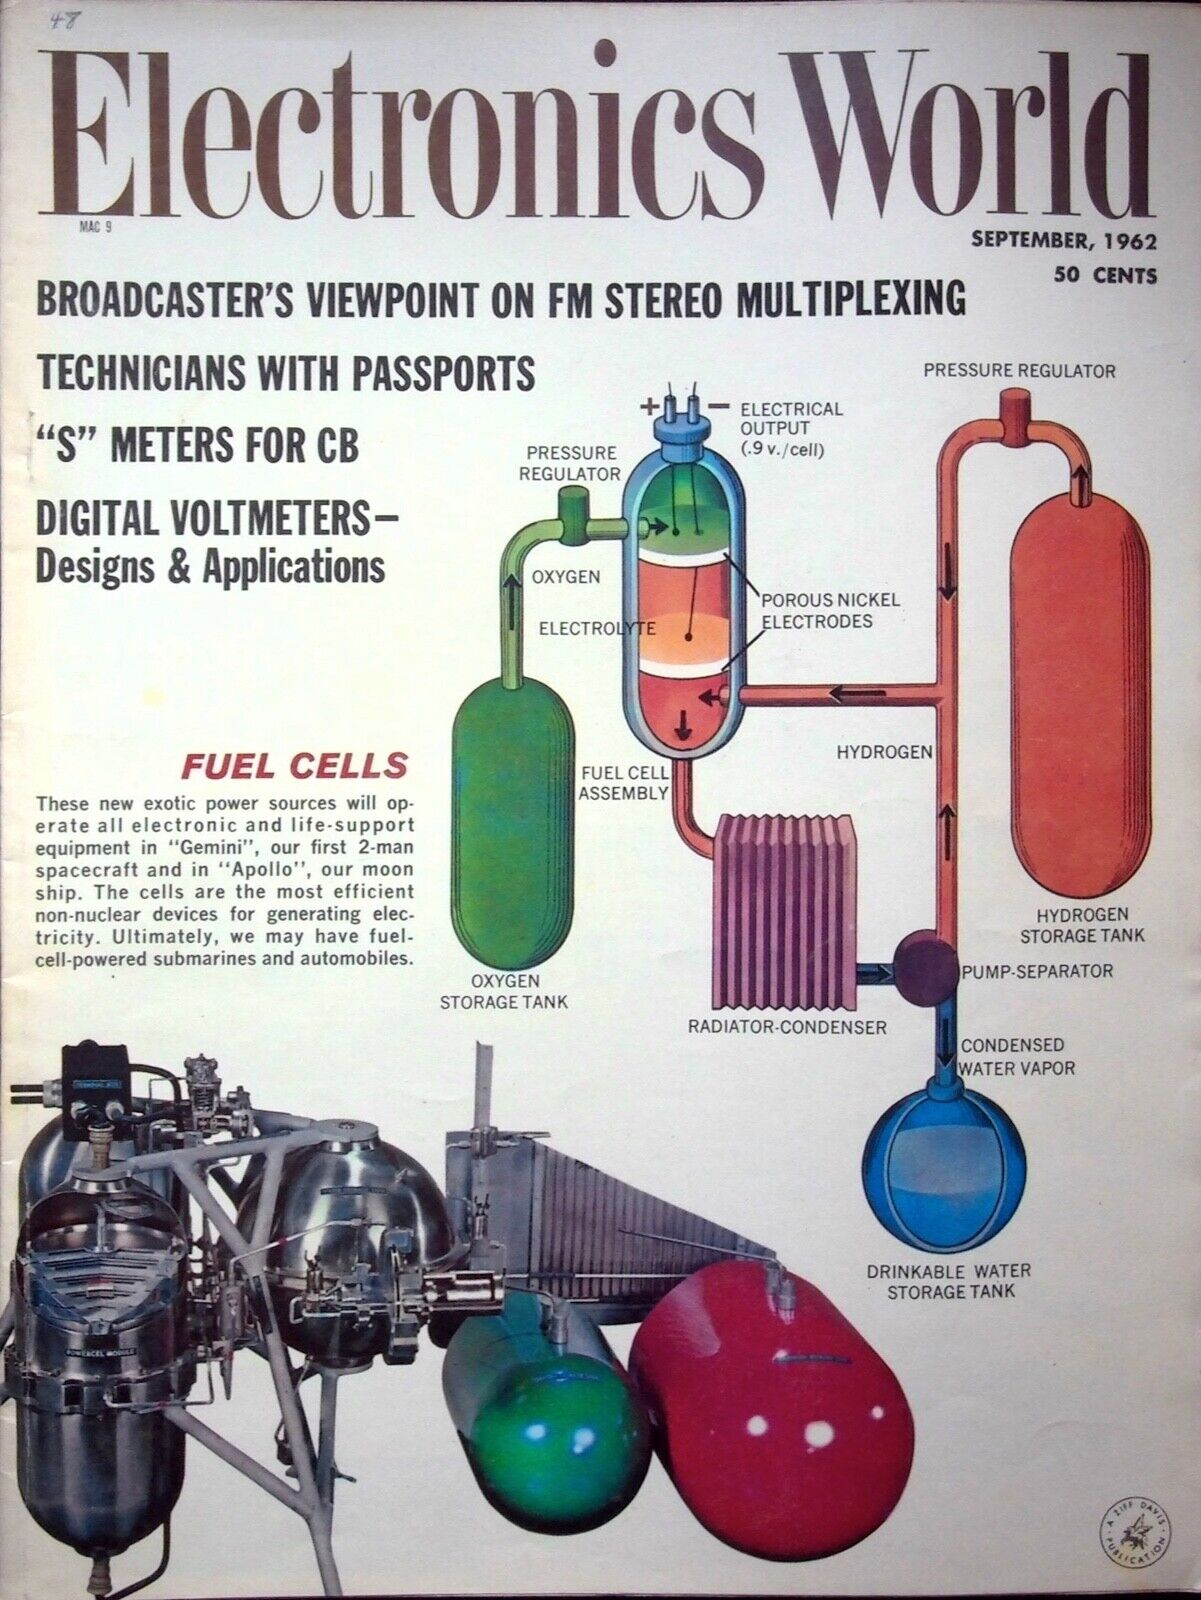 FUEL CELLS, ELECTRONICS WORLD  MAGAZINE - SEPTEMBER, 1962